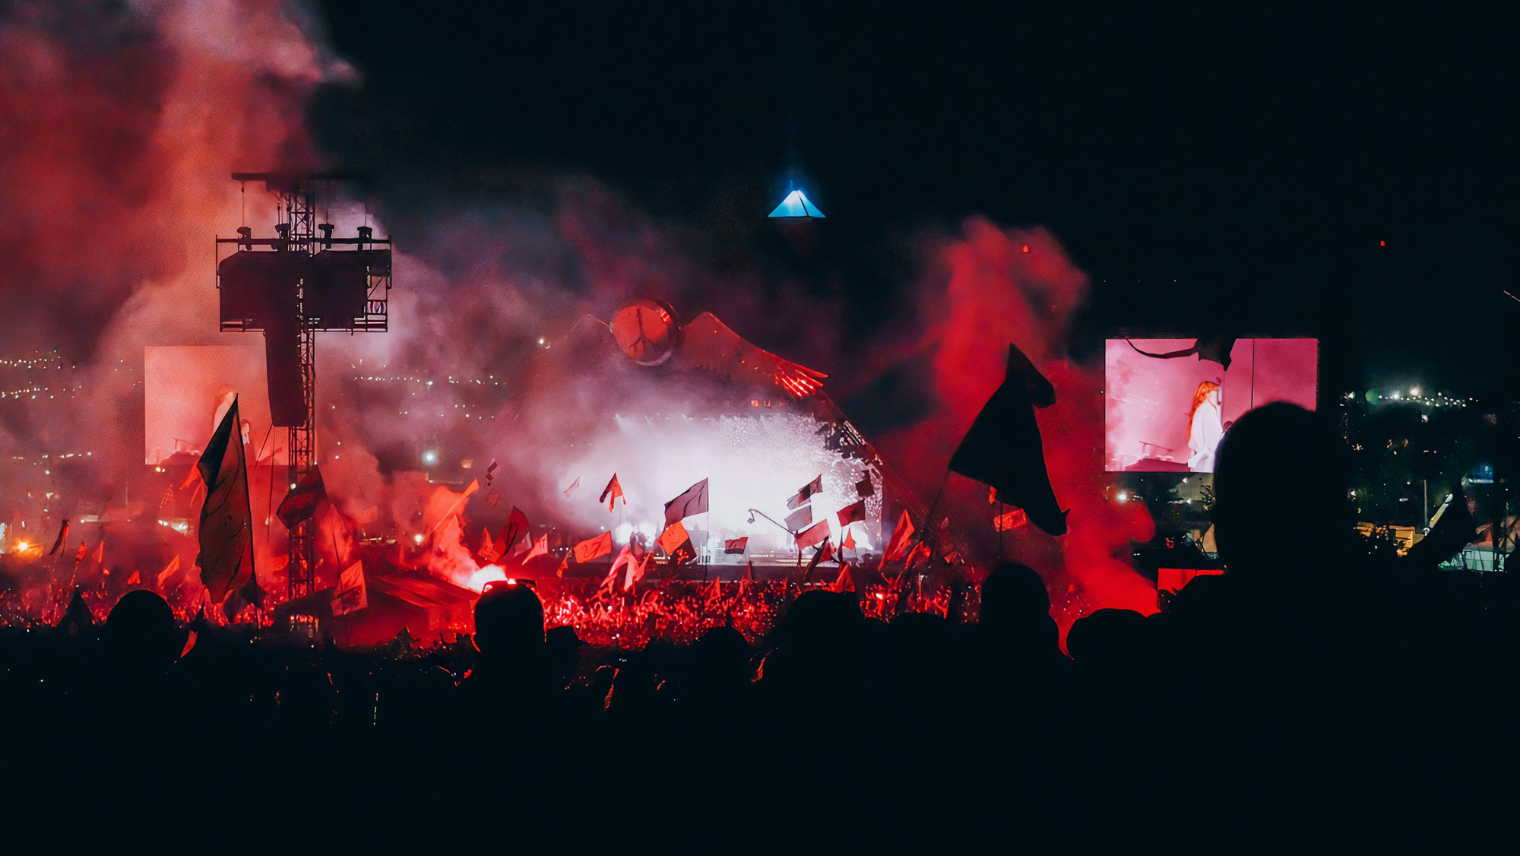 Glastonbury Pyramid Stage at night with crowd